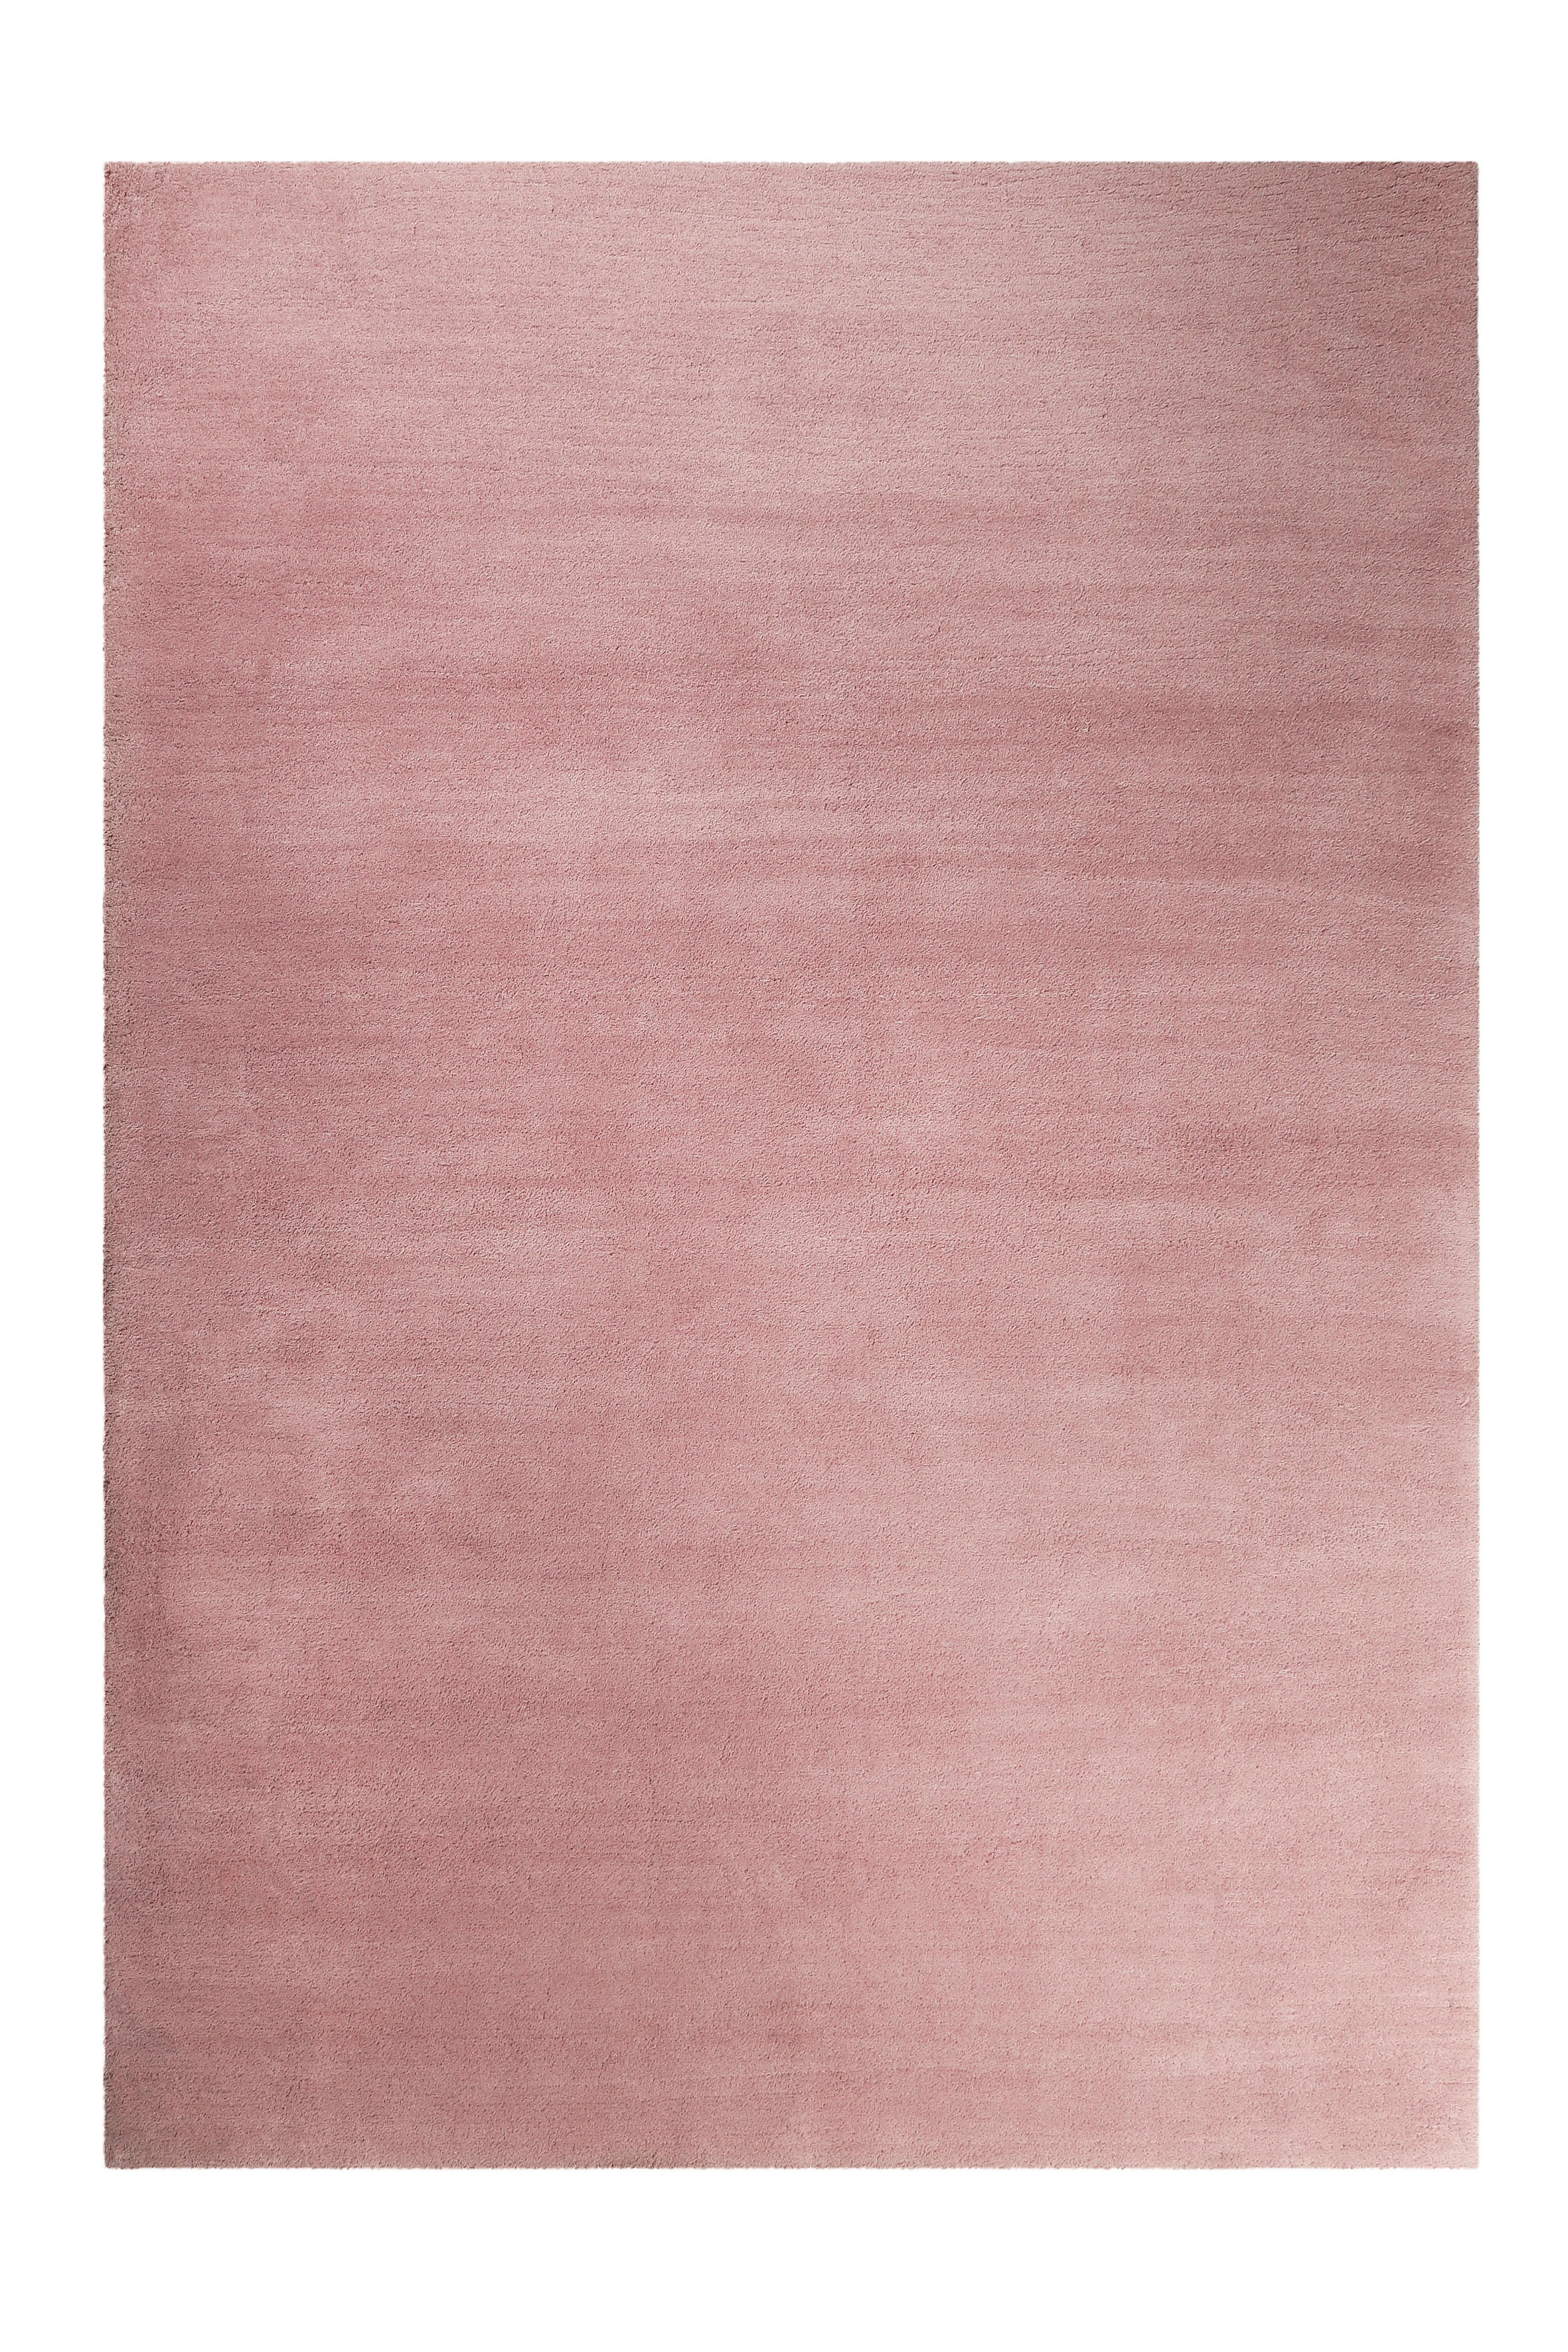 HOCHFLORTEPPICH  70/140 cm  getuftet  Rosa   - Rosa, Basics, Textil (70/140cm) - Esprit